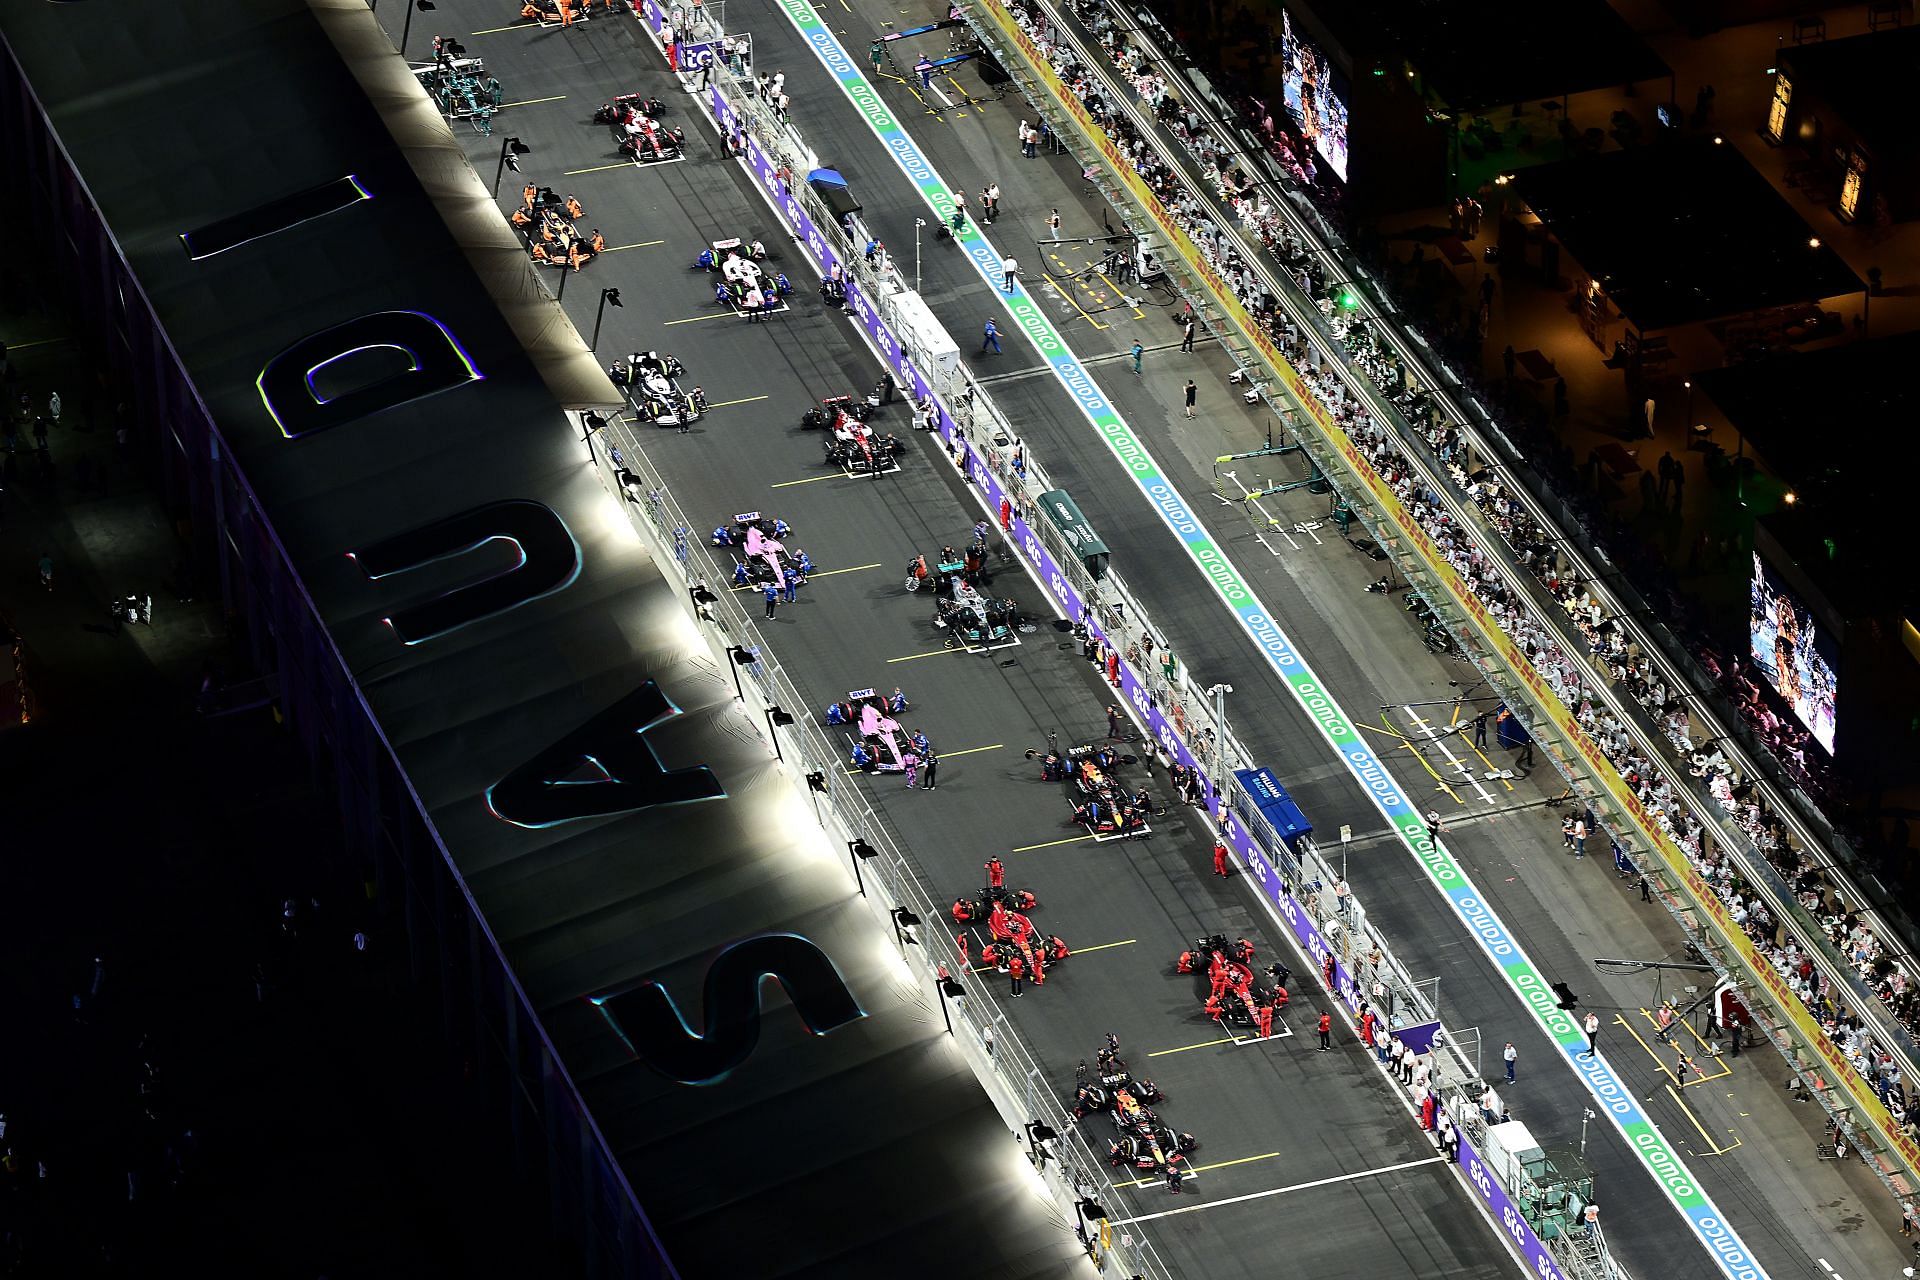 F1 Grand Prix of Saudi Arabia - The grid prepares for the race